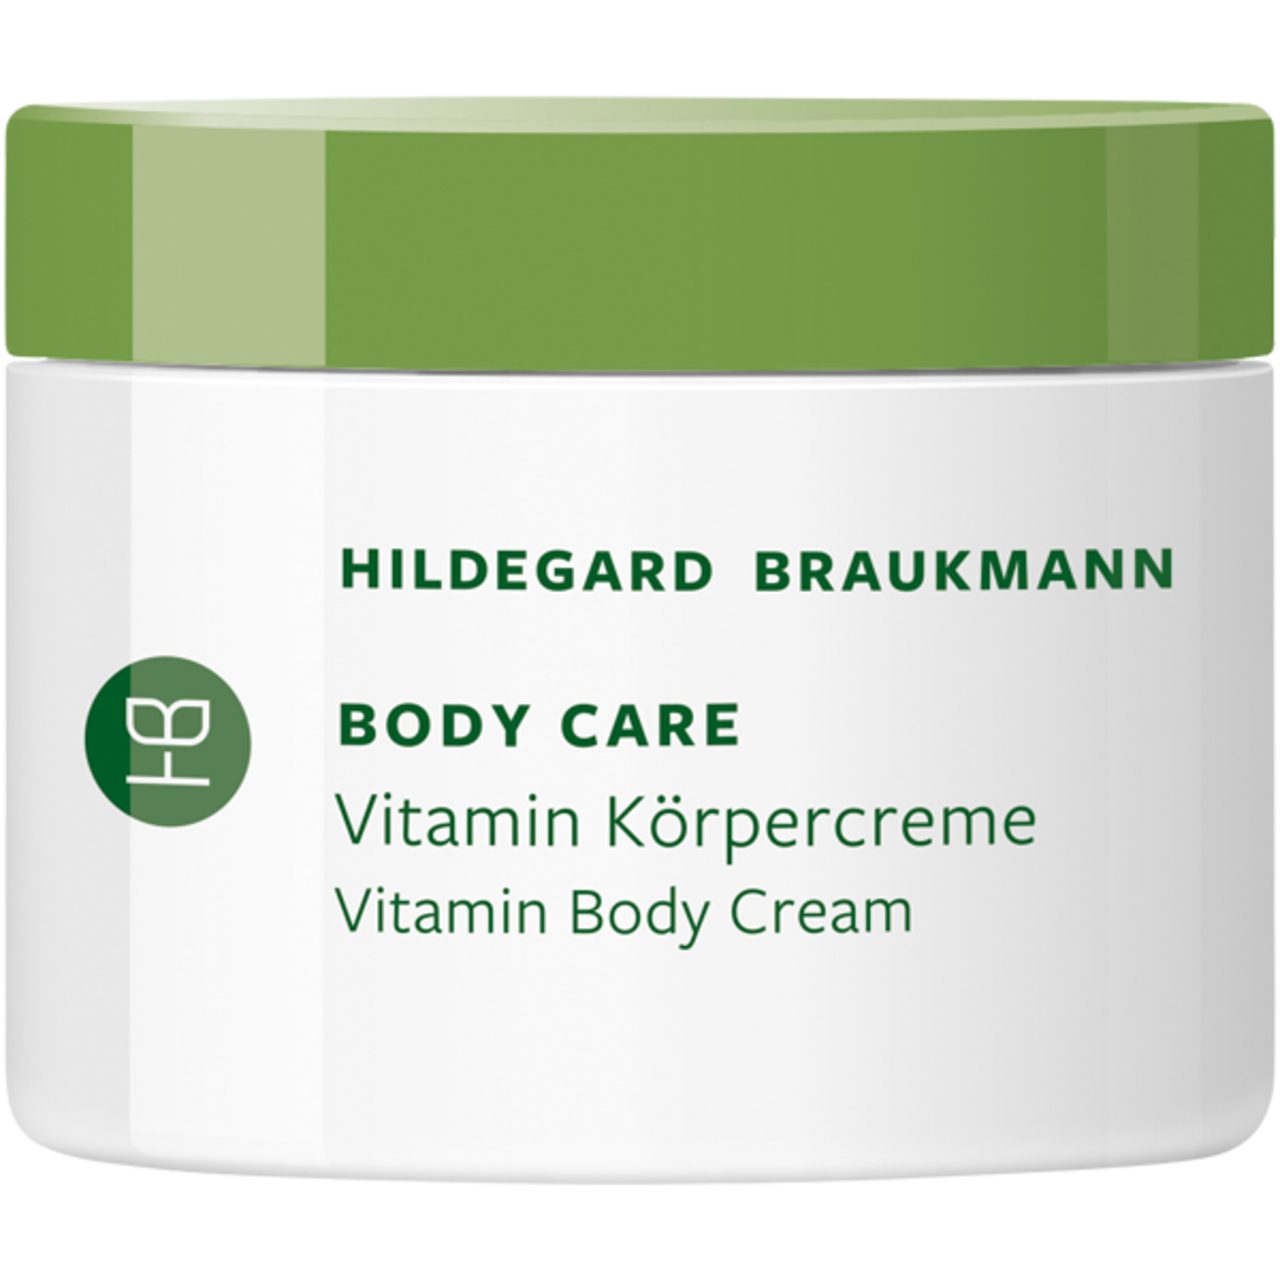 Hildegard Braukmann Körpercreme Body Care Vitamin Körper Creme